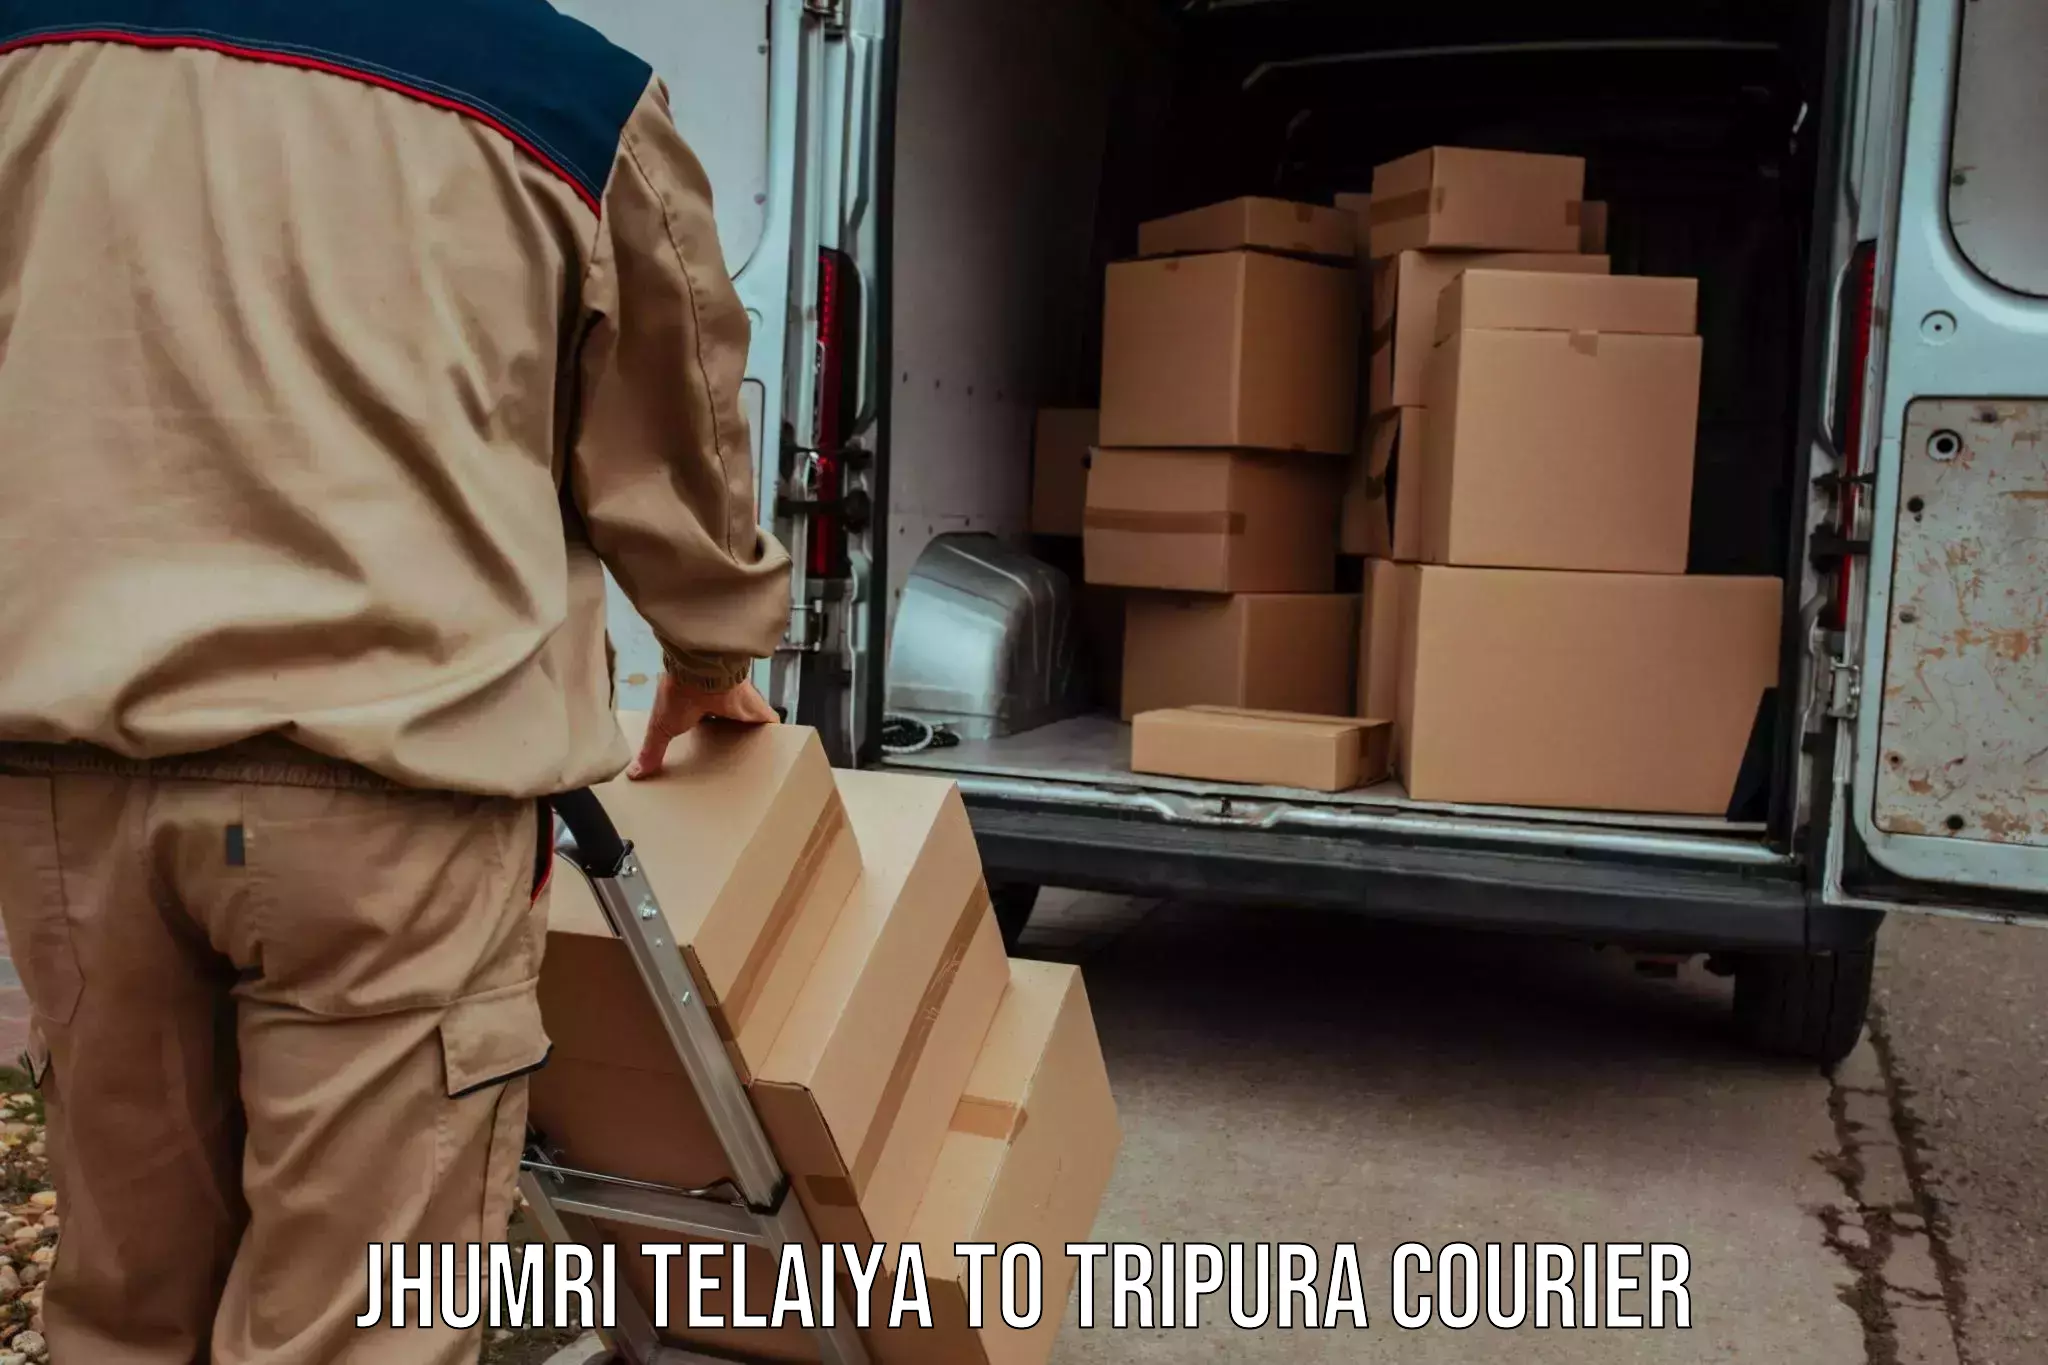 Next-day delivery options Jhumri Telaiya to Udaipur Tripura